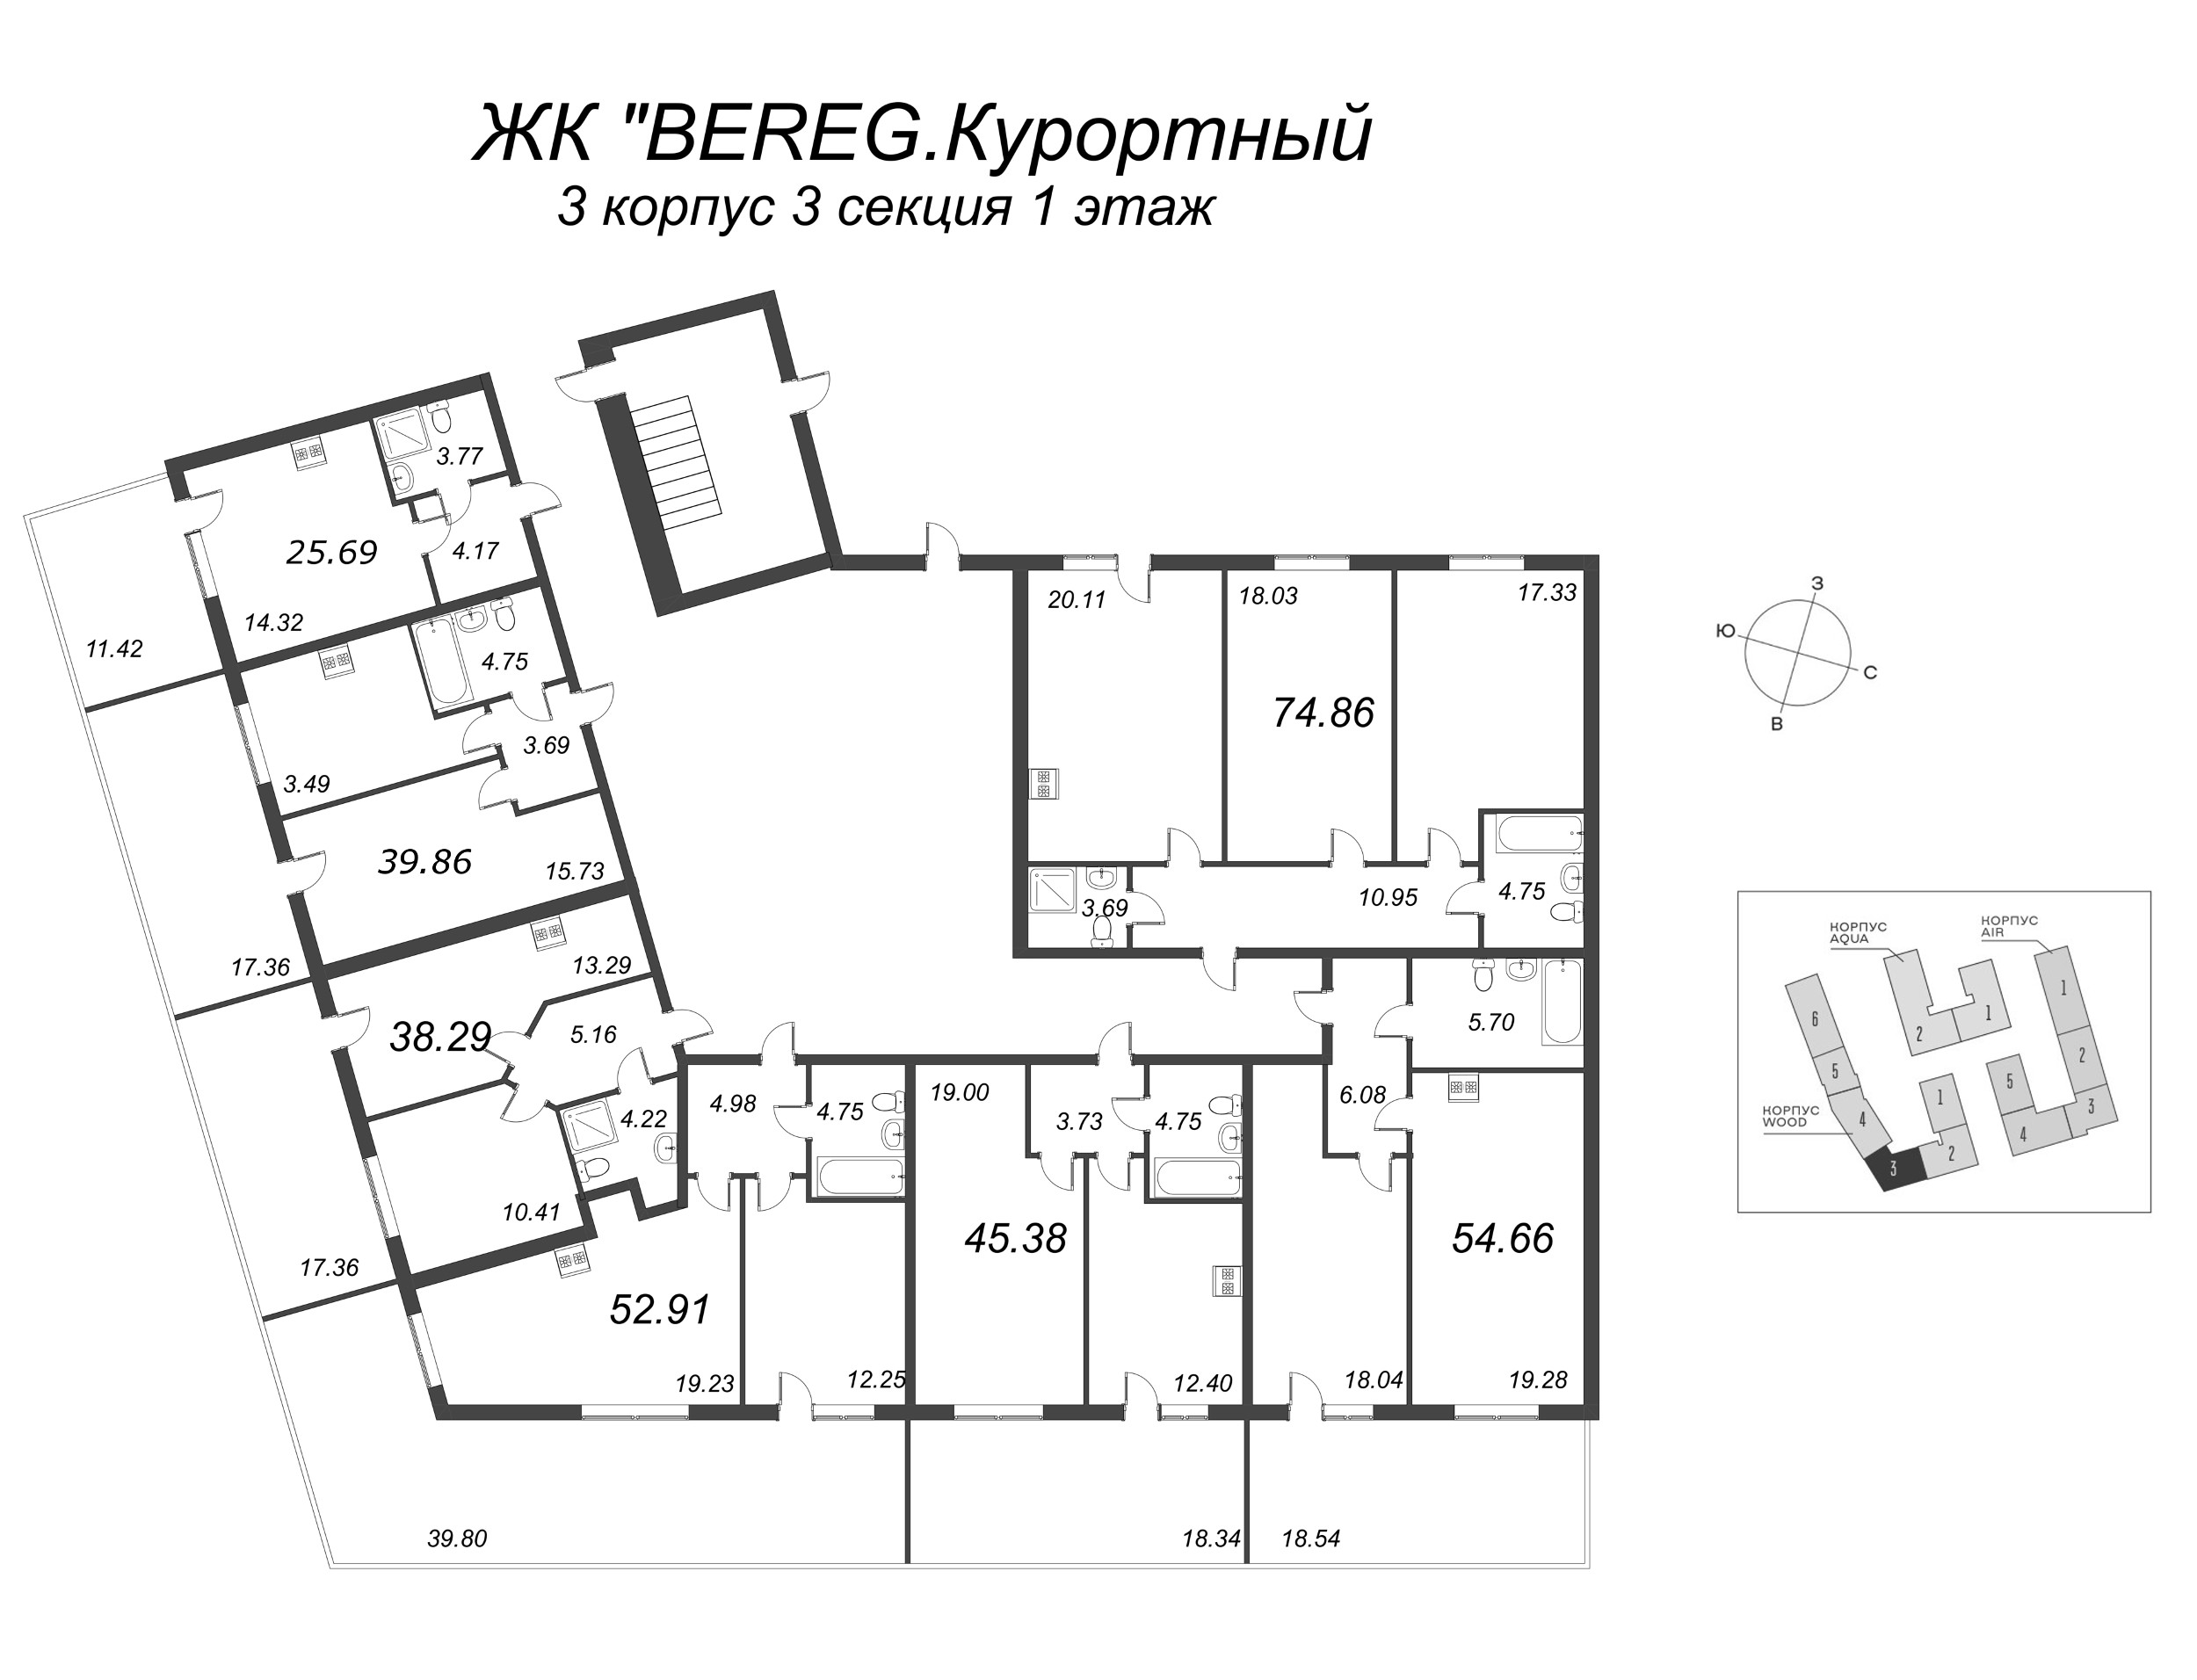 3-комнатная (Евро) квартира, 74.86 м² - планировка этажа